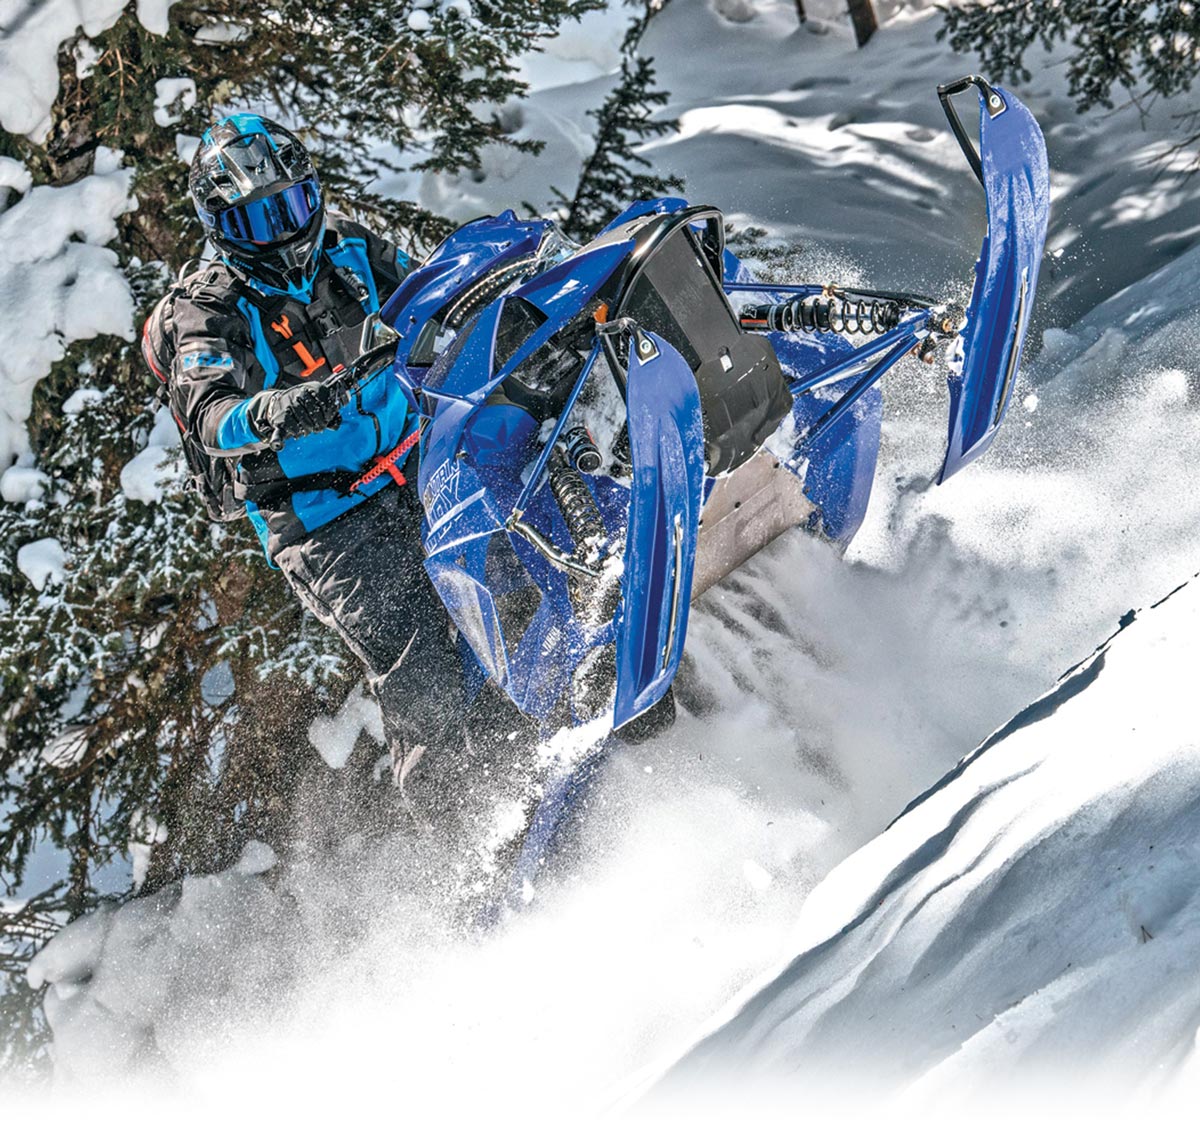 a rider on a blue snowmobile